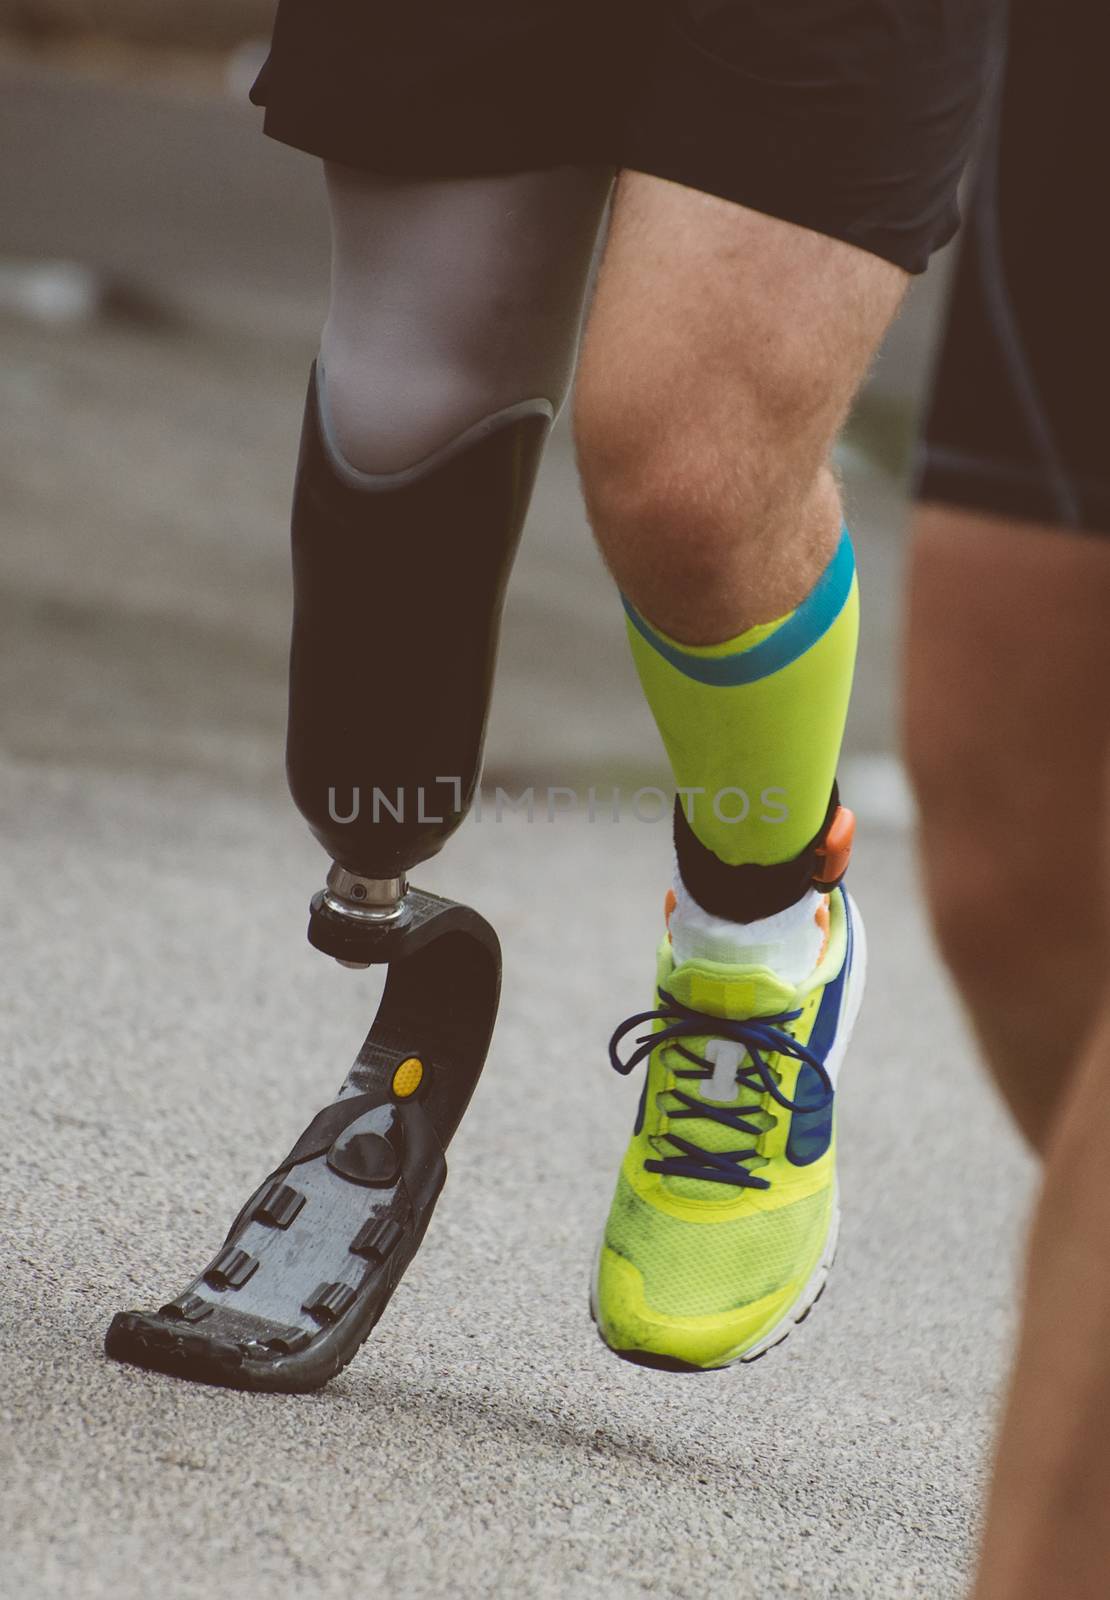 Man running with prosthetic leg on the street.